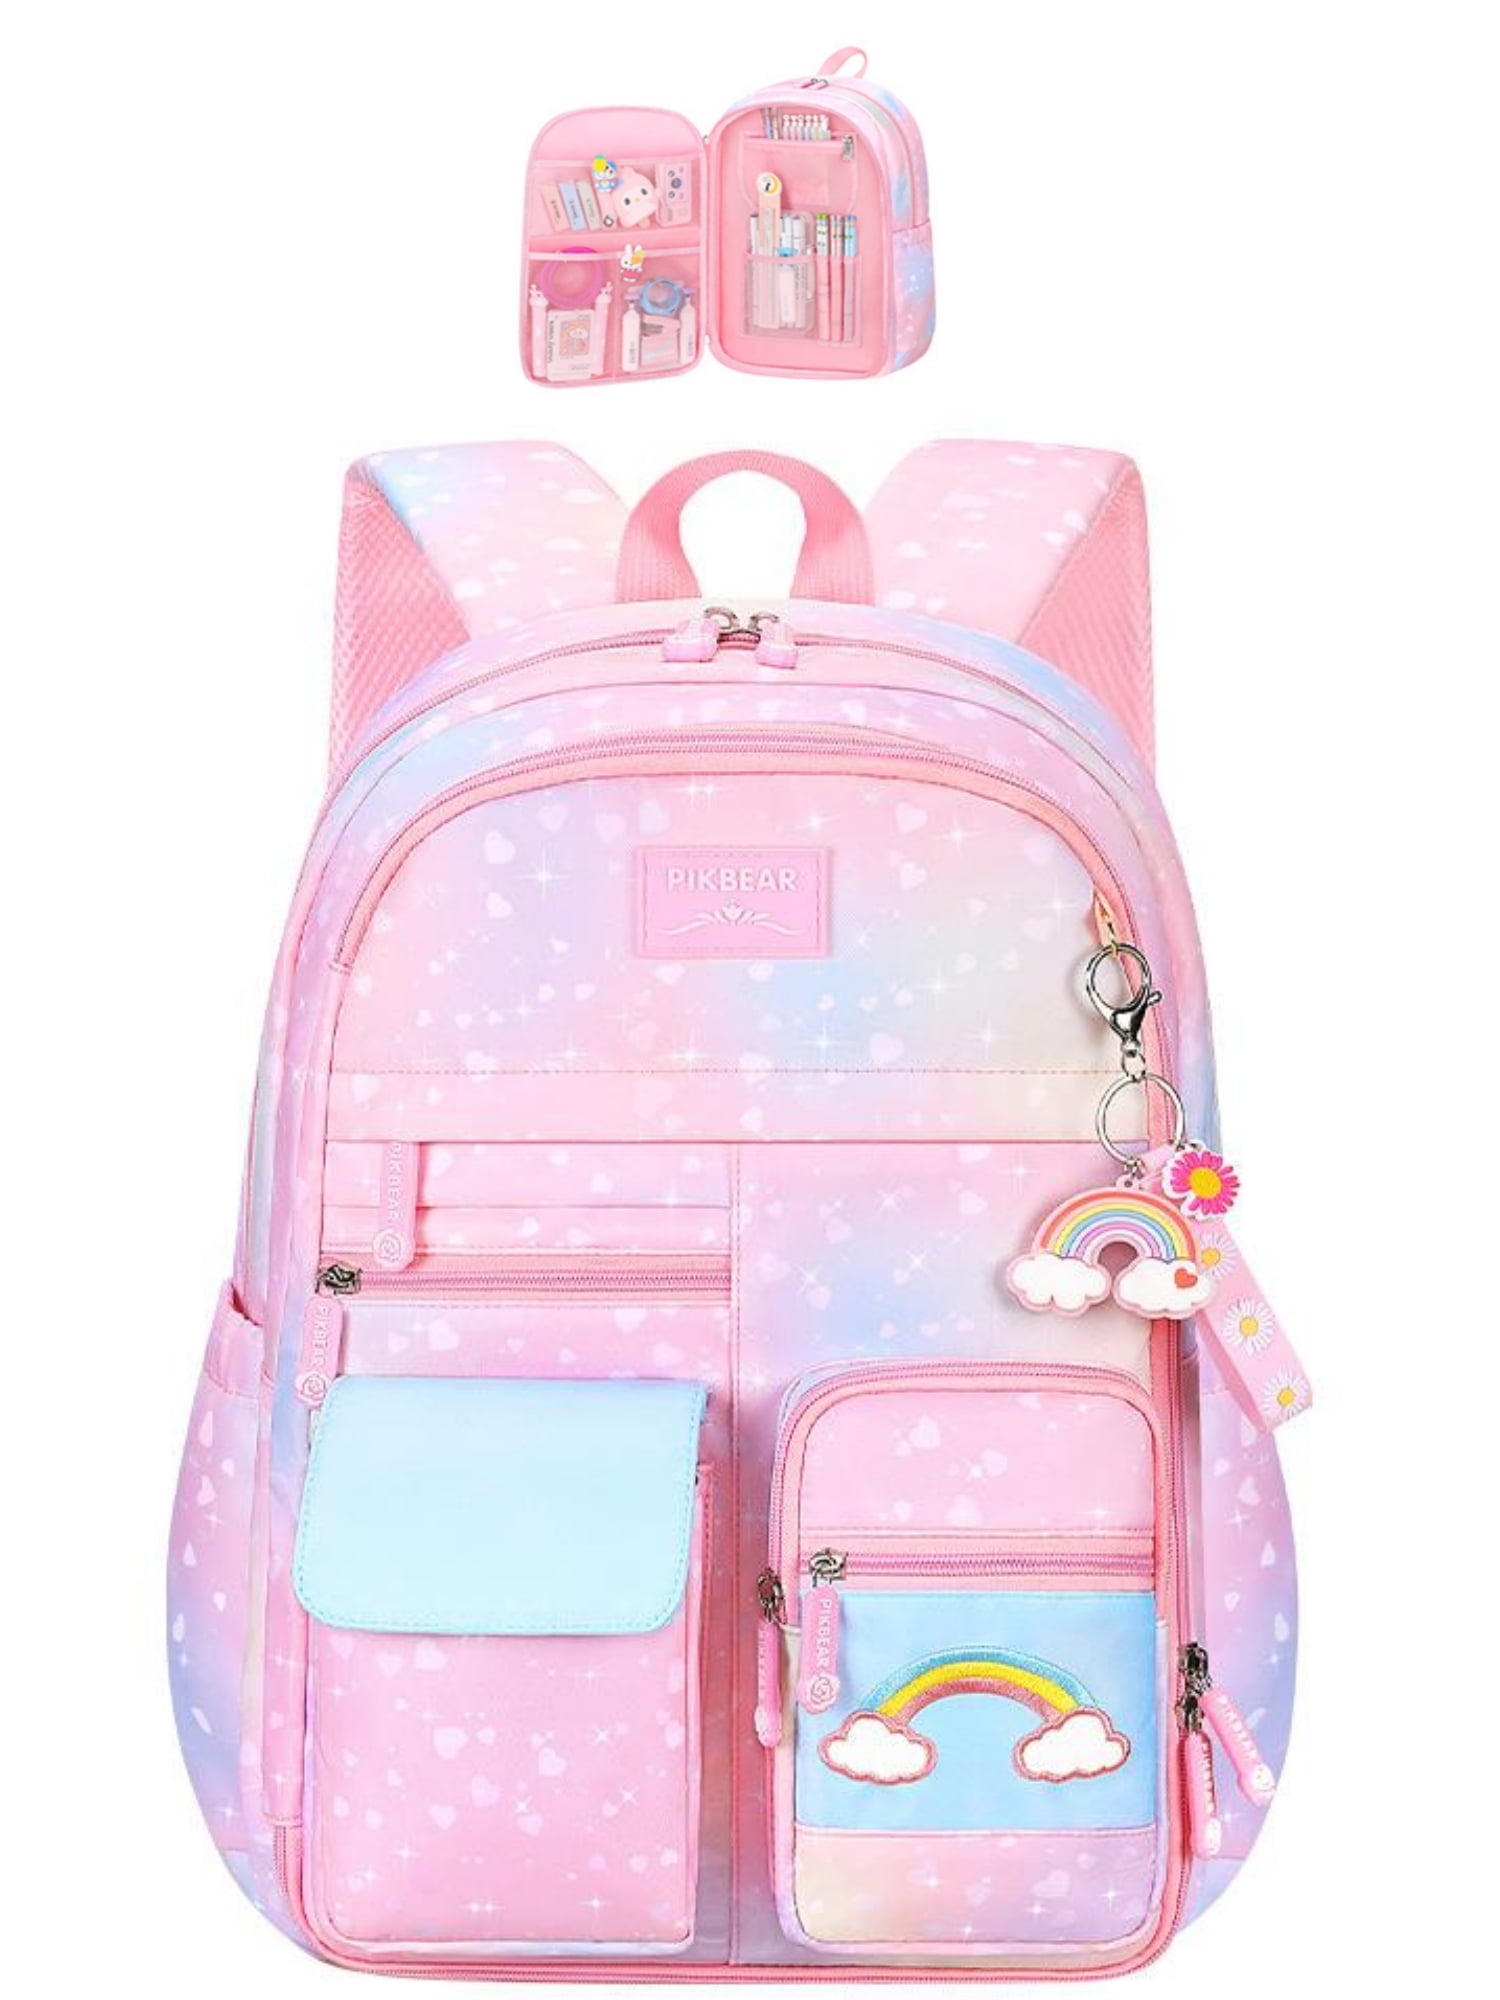 Girls Backpack School Bag for Girls, Cute Pink Bookbag with ...